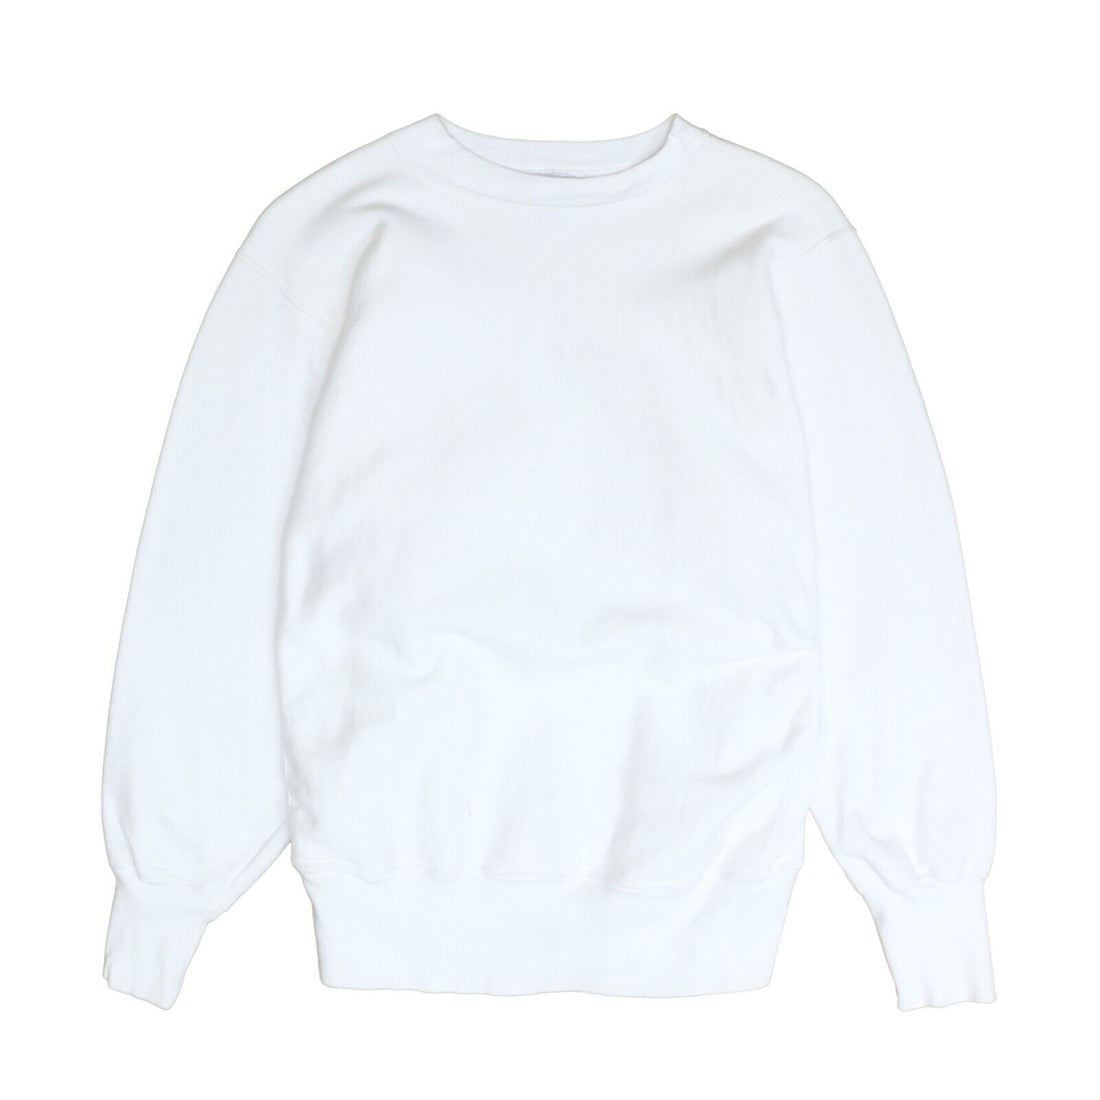 Vintage Champion Sweatshirt Crewneck Size Medium White 80s